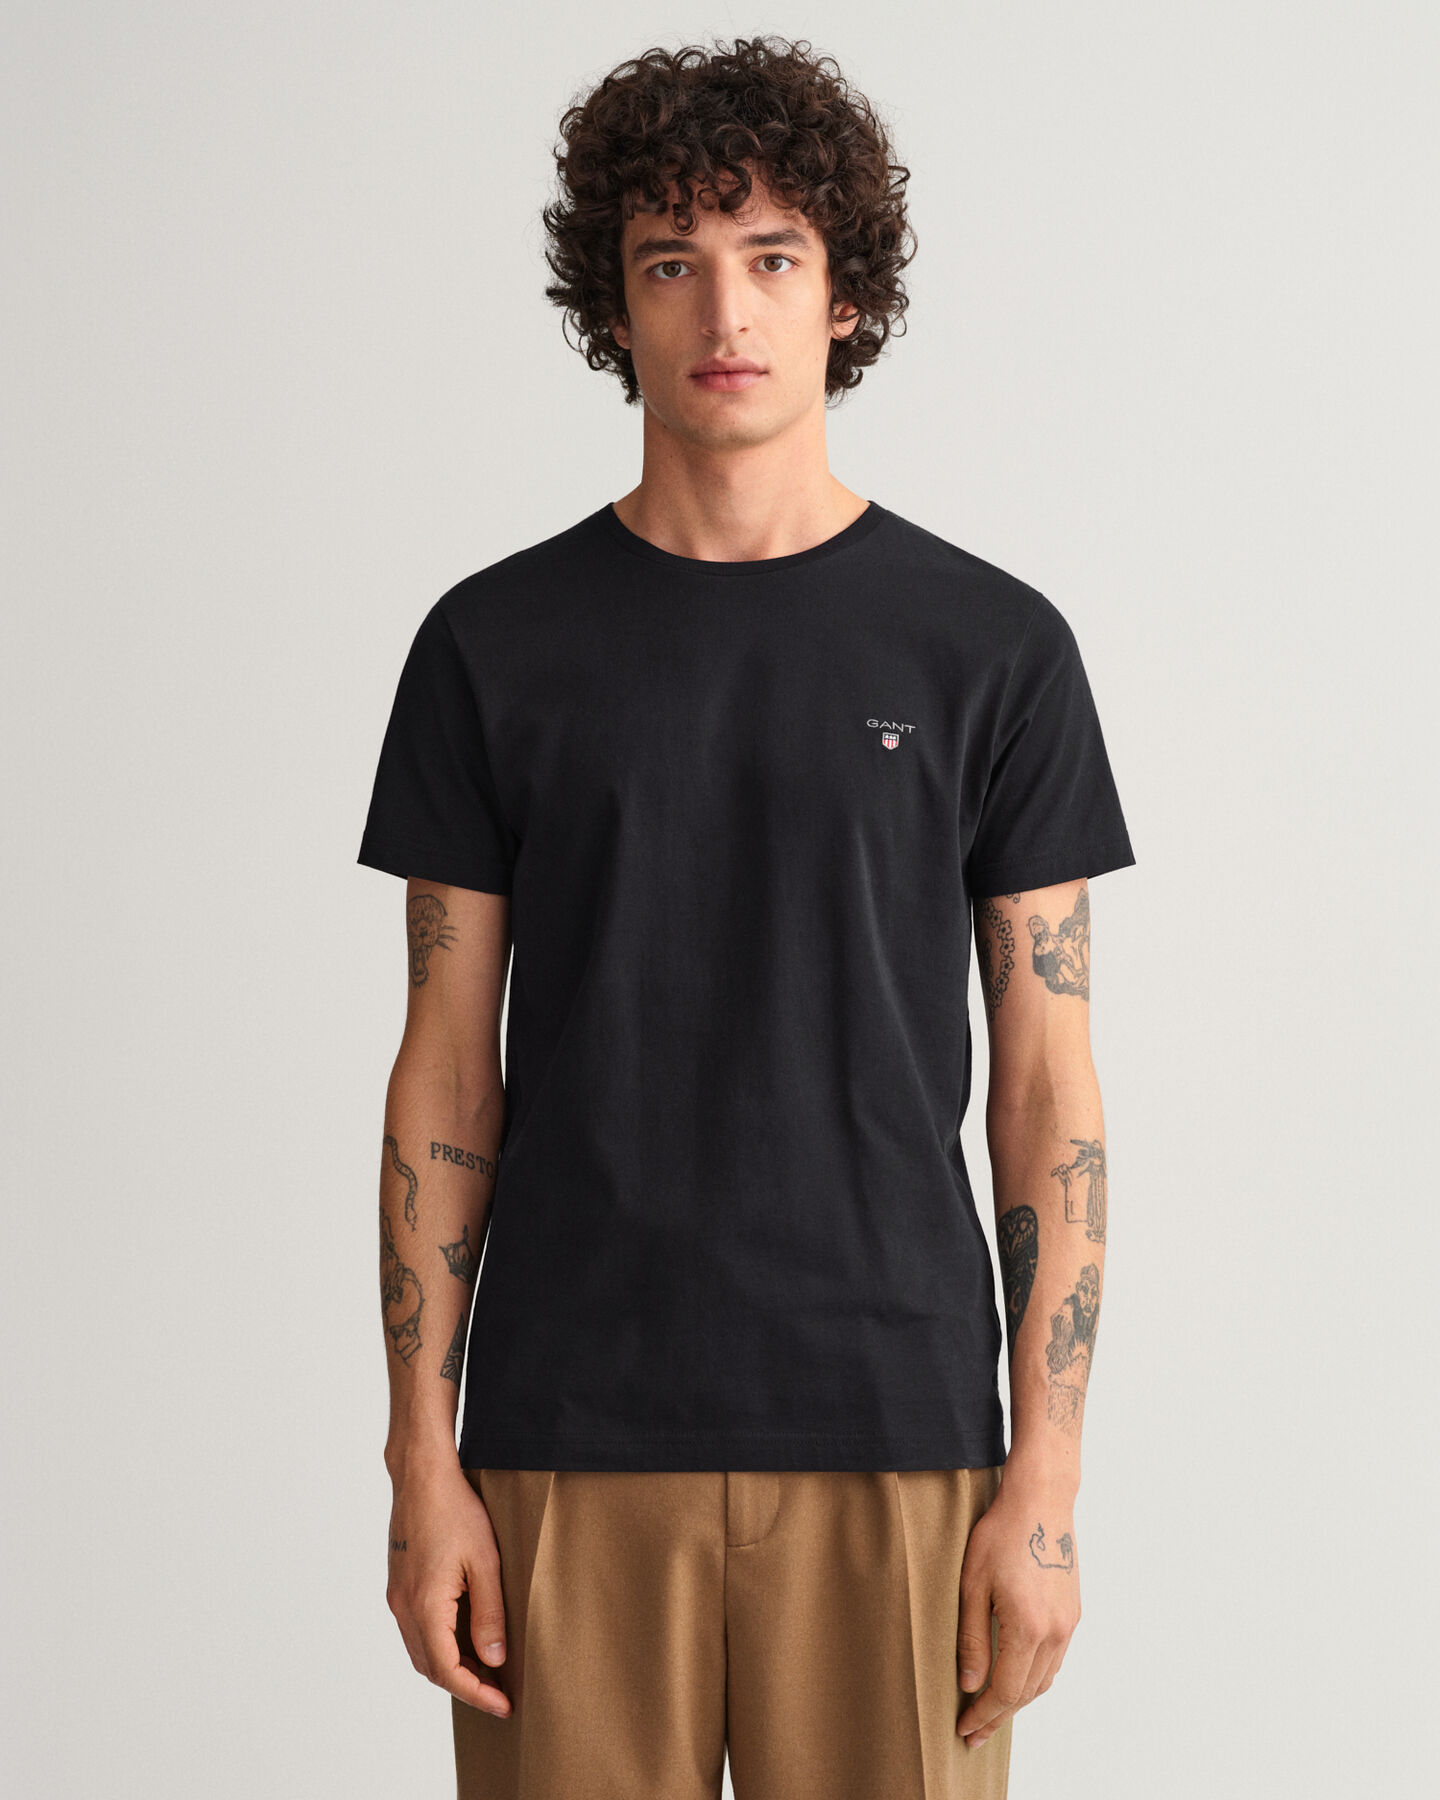 GANT - Original Fit T-Shirt Slim